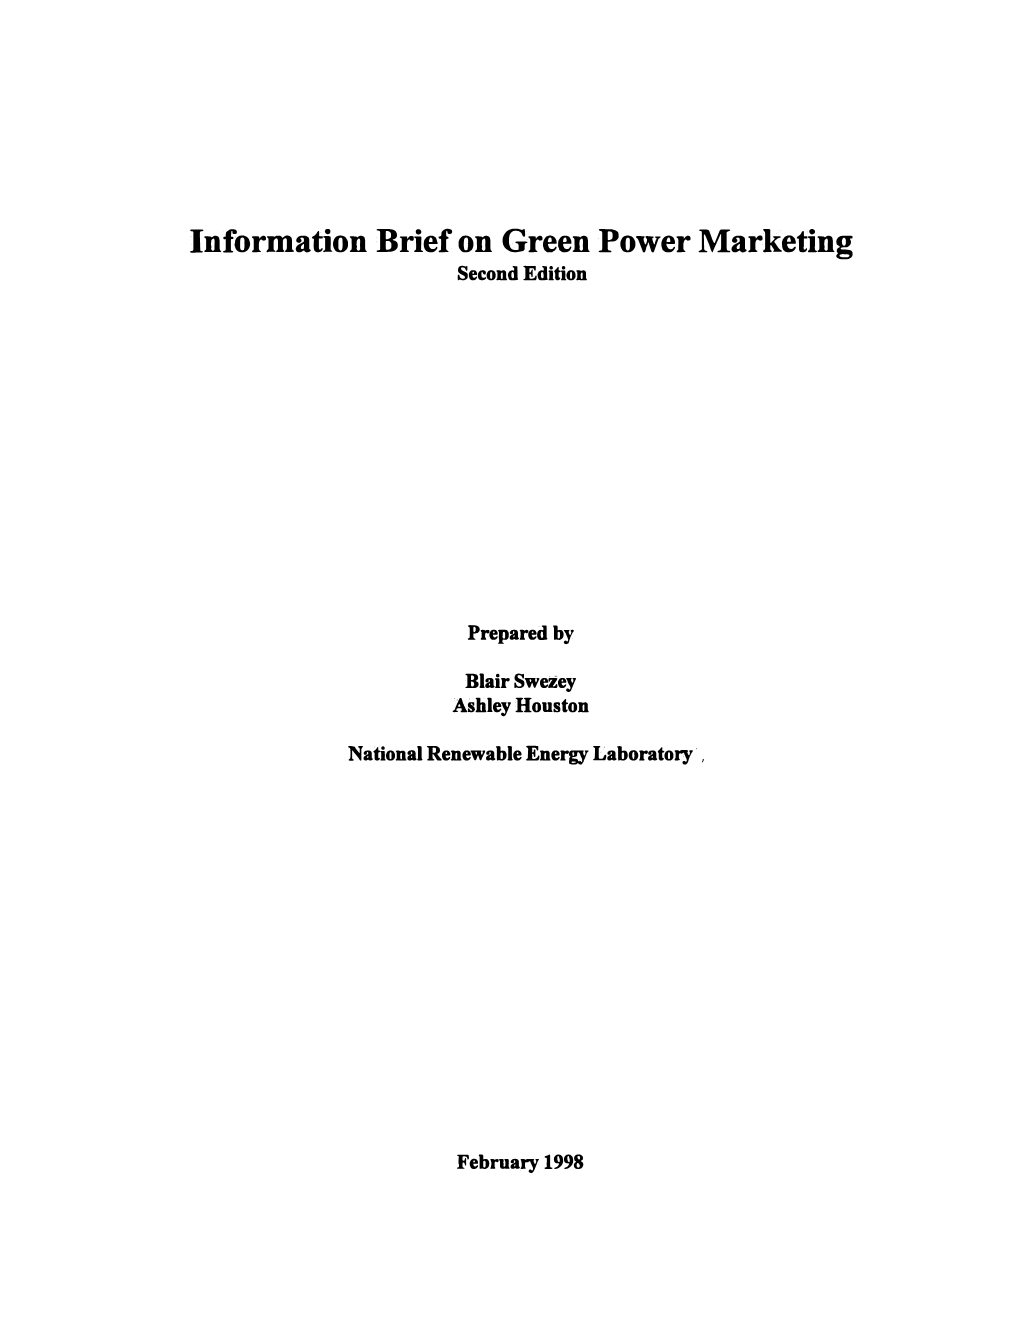 Information Brief on Green Power Marketing Second Edition